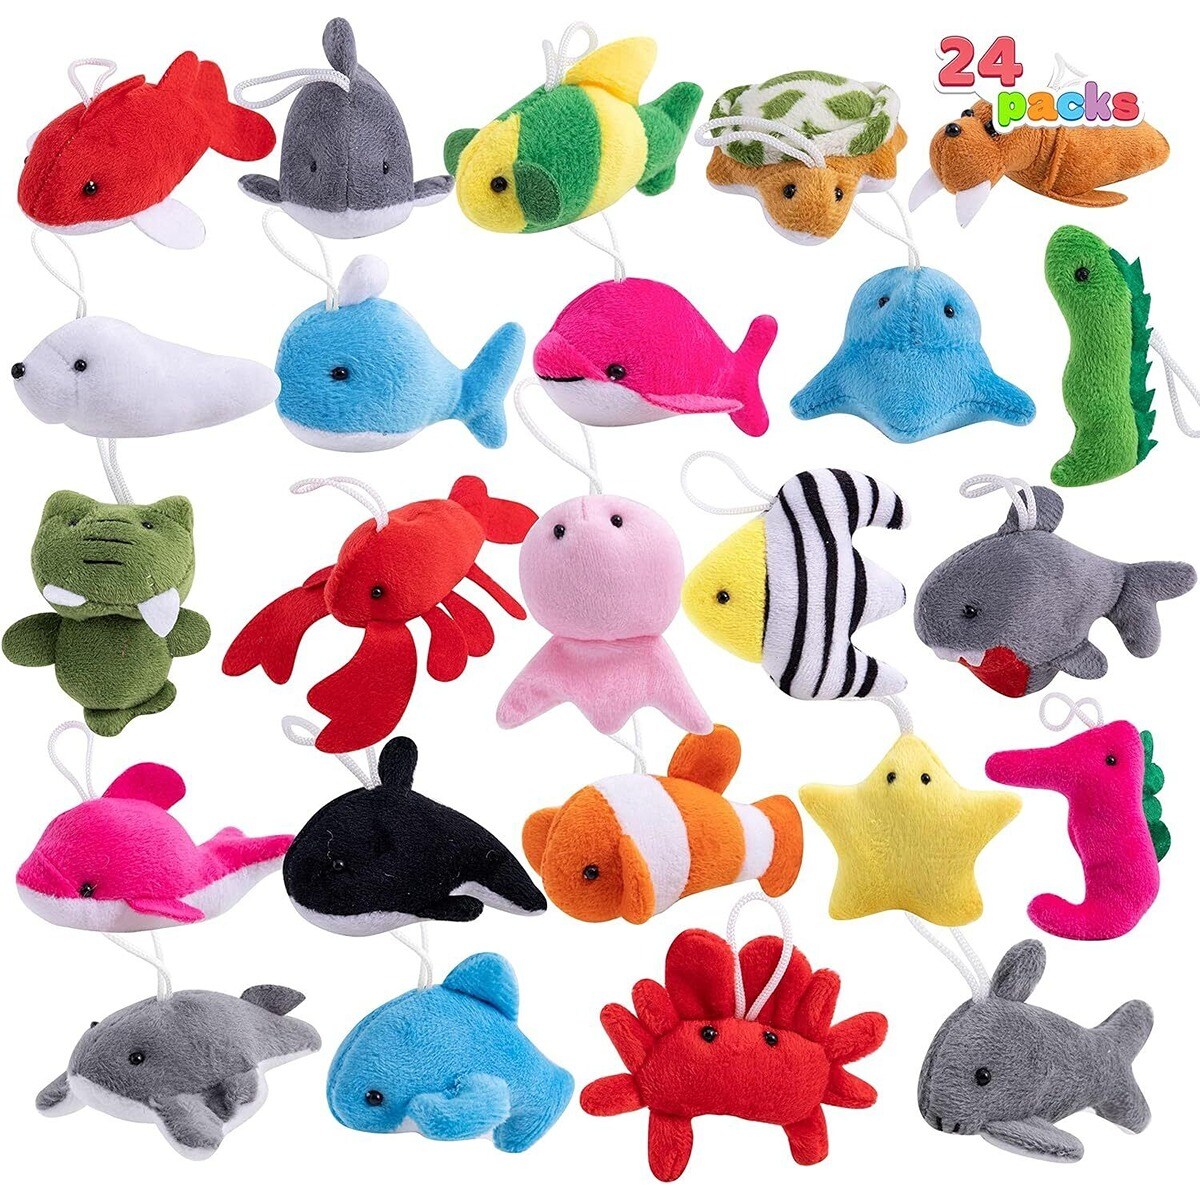 Small Animal Plush Toy 24 packs